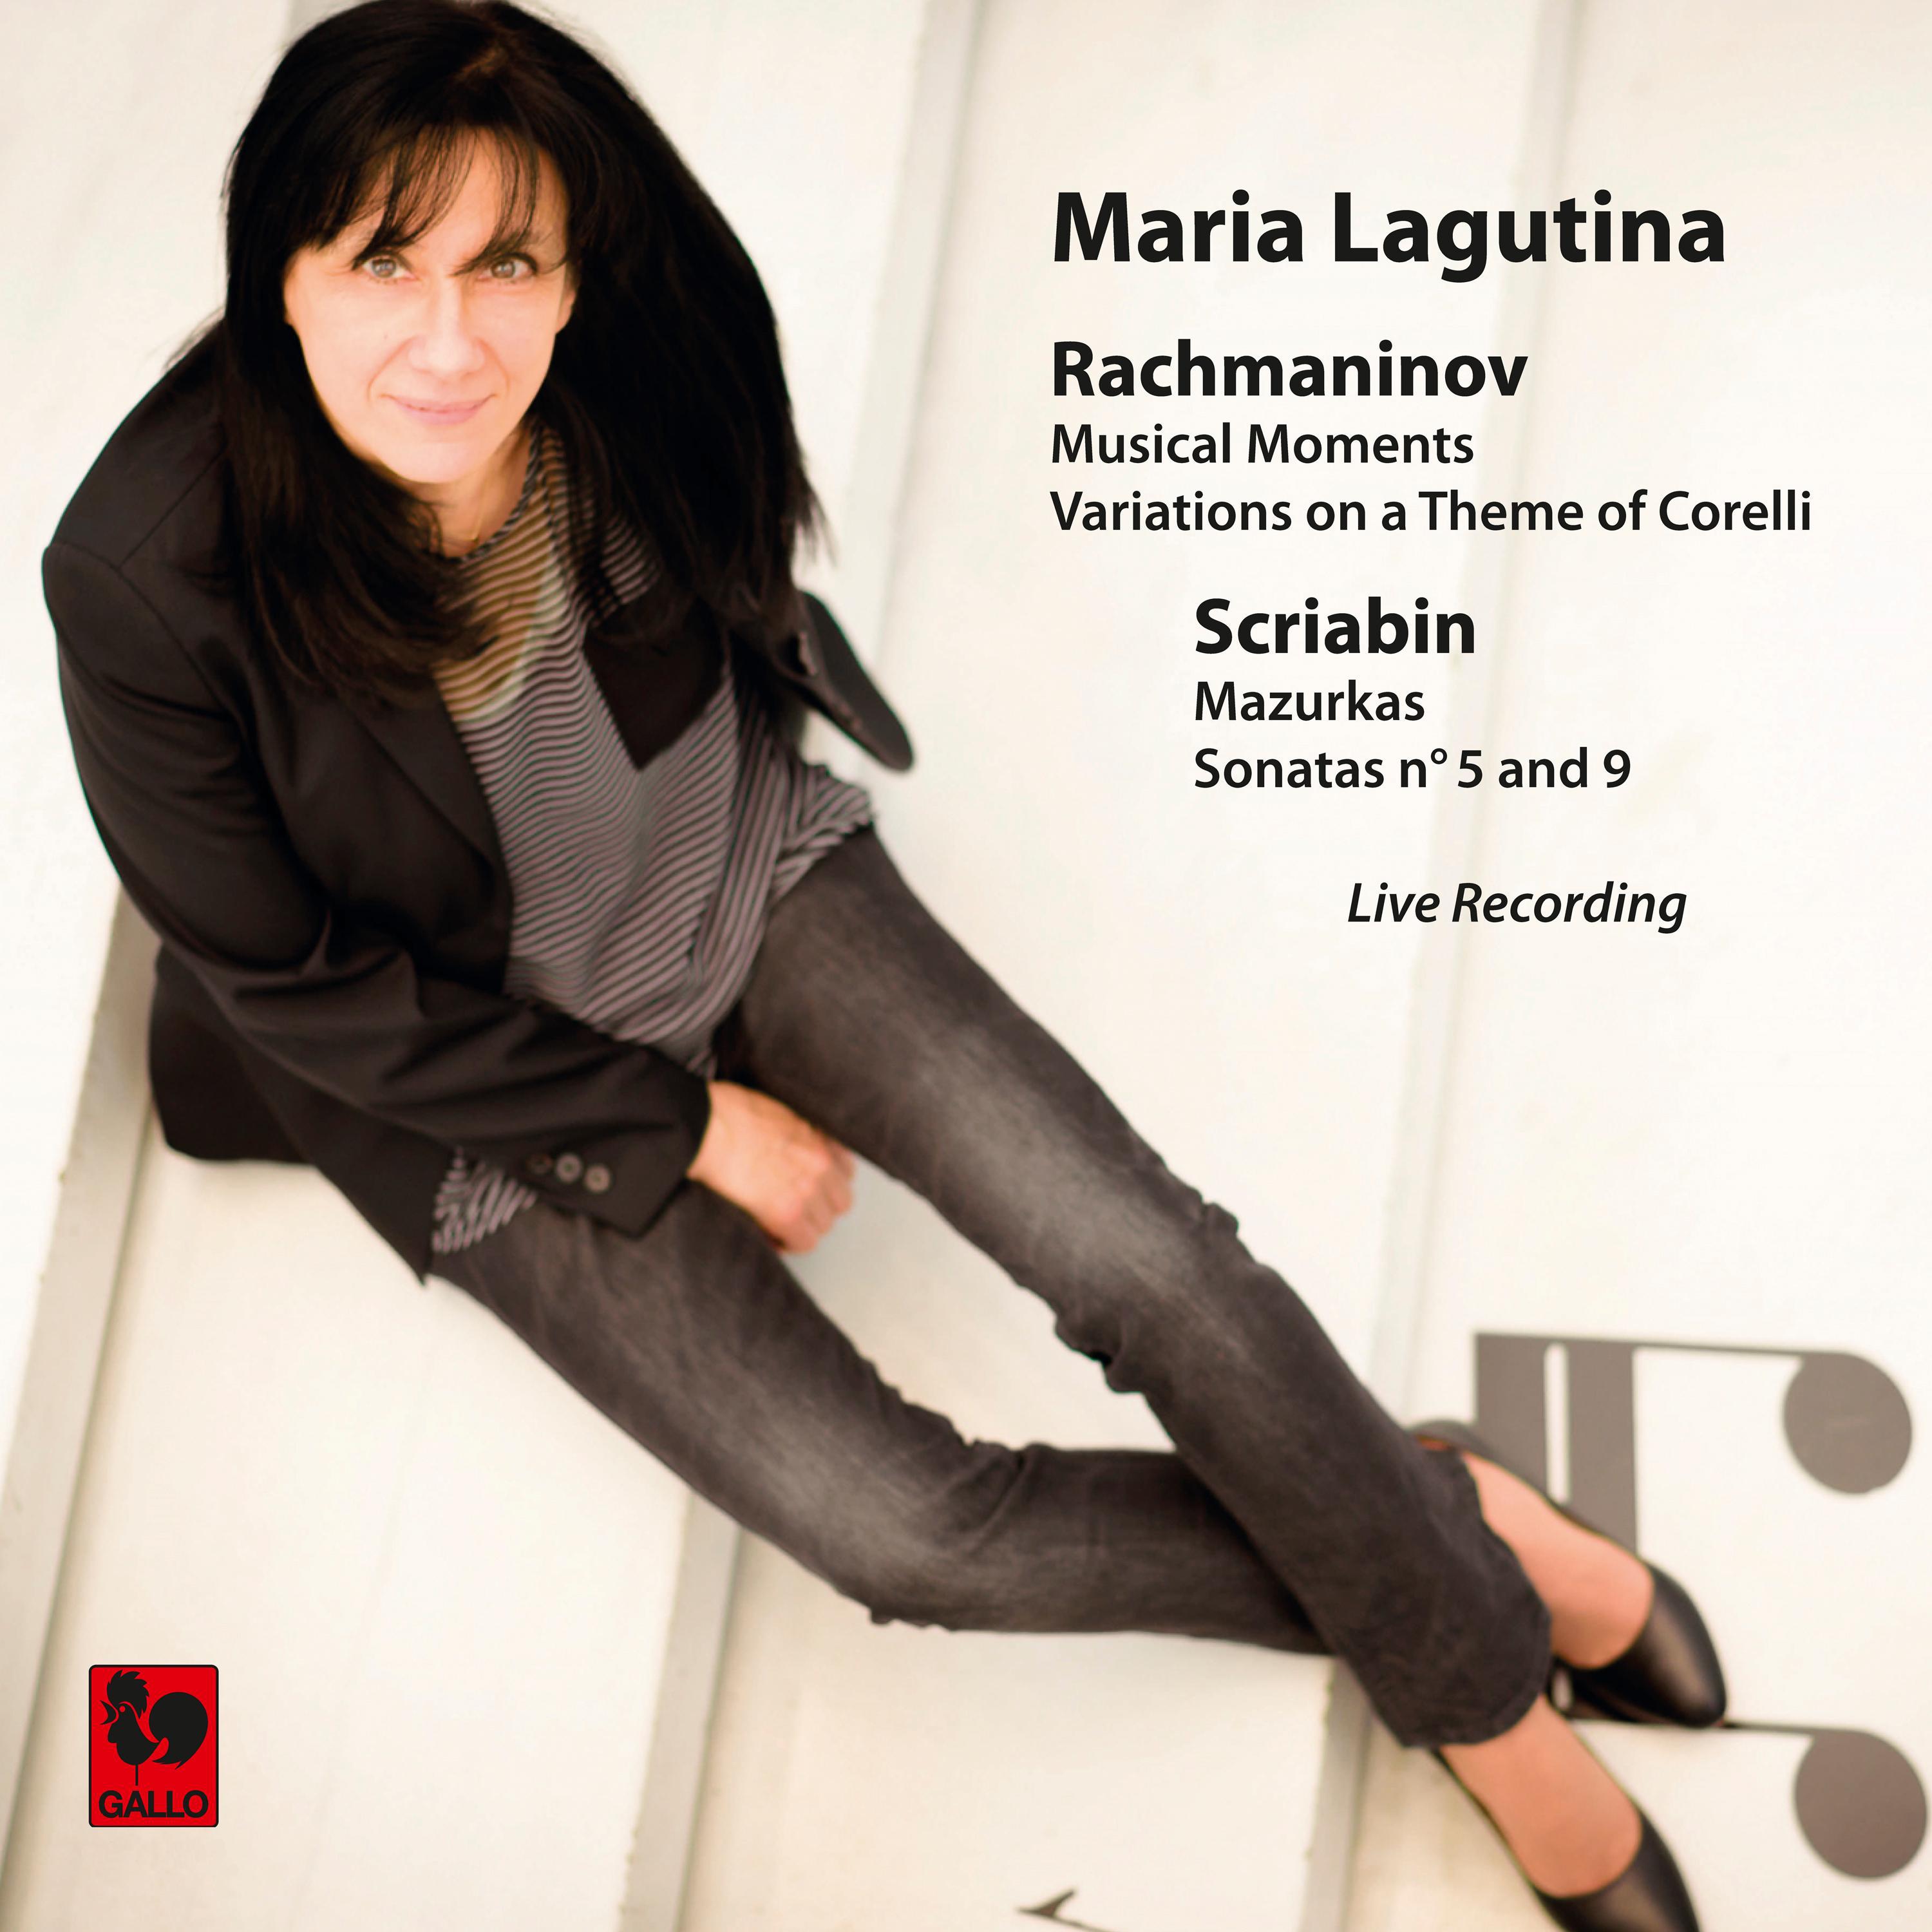 Rachmaninoff: 6 Moments Musicaux, Op. 16 - Scriabin: 9 Mazurkas, Op. 25 - Piano Sonata No. 5, Op. 53 - Piano Sonata No. 9, Op. 68 "Black Mass" (Live)